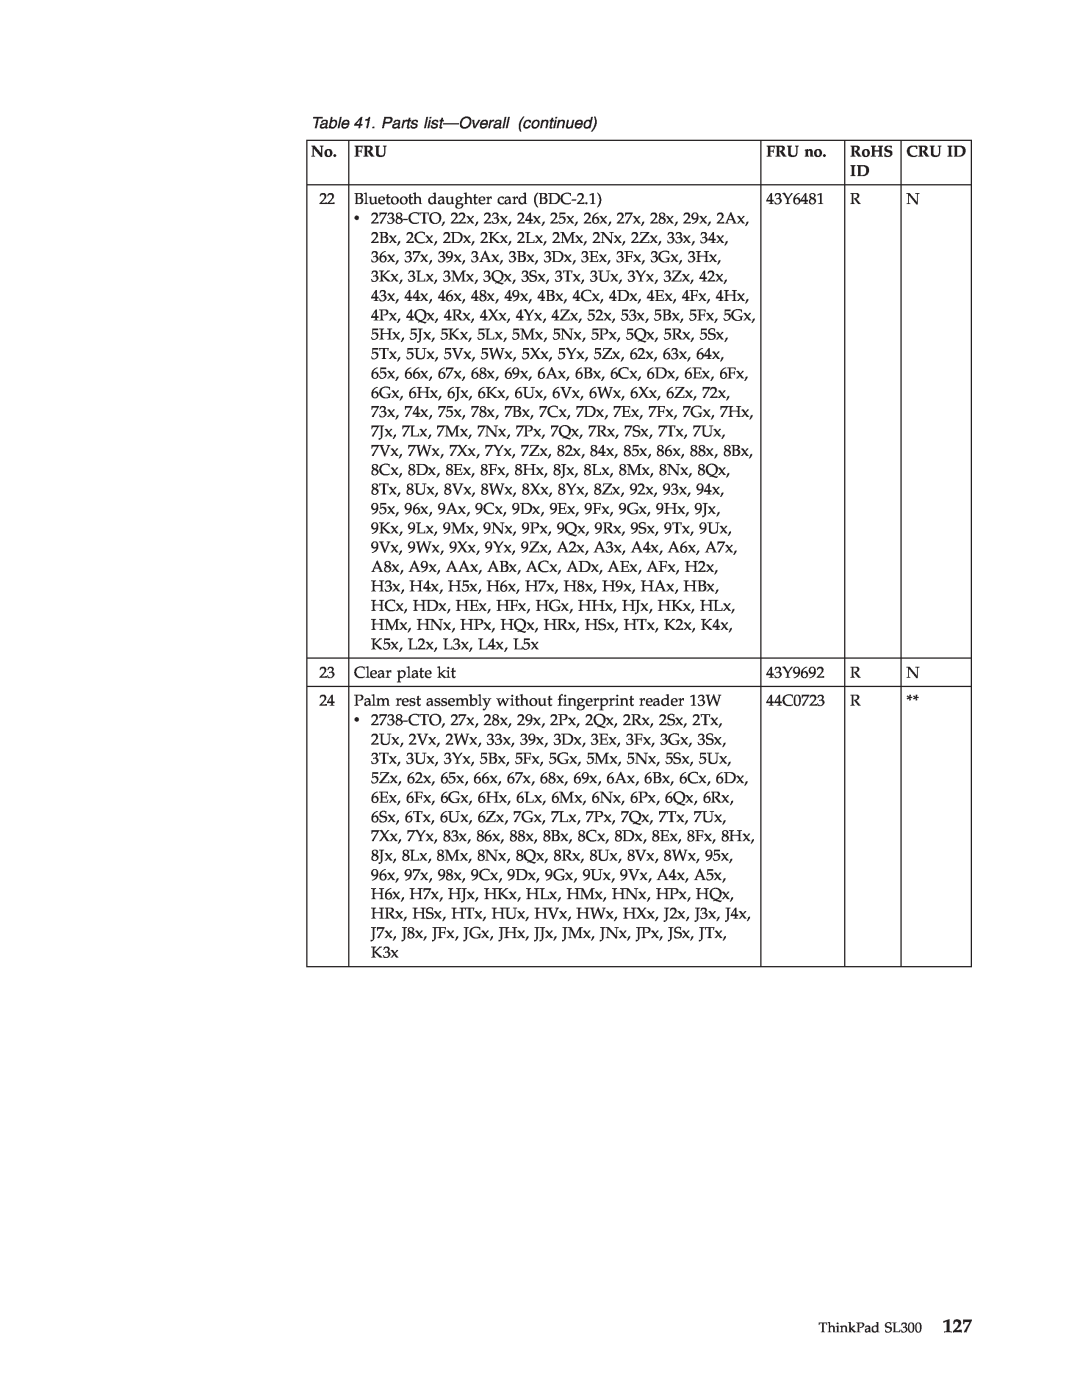 Lenovo SL300 manual Parts list-Overall continued, FRU no, RoHS, Cru Id 